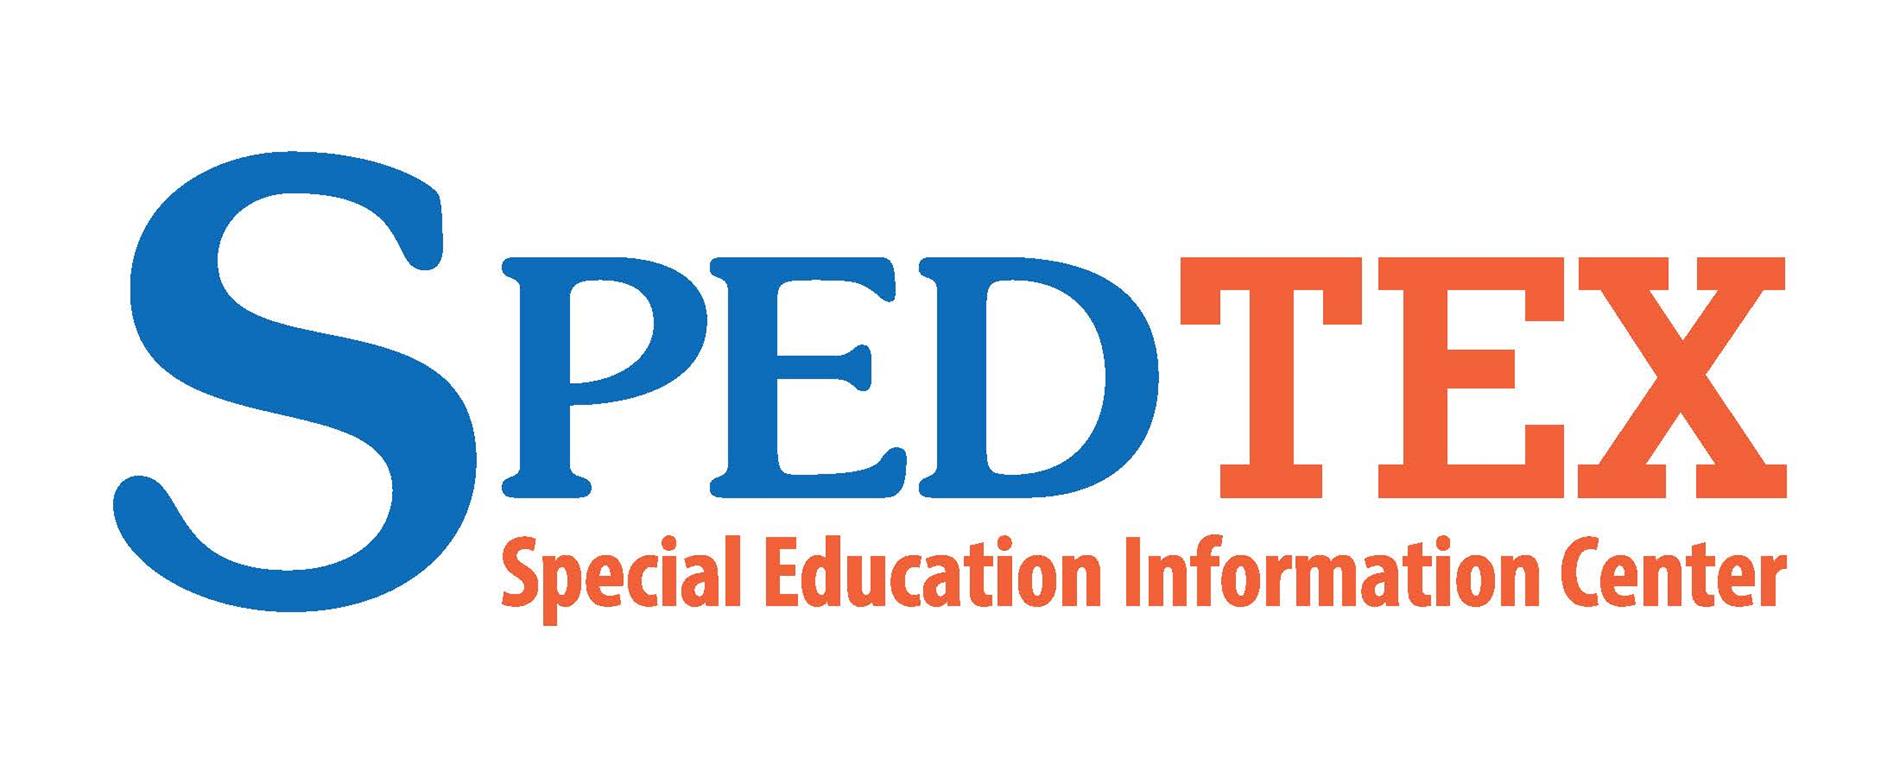 sped tx logo